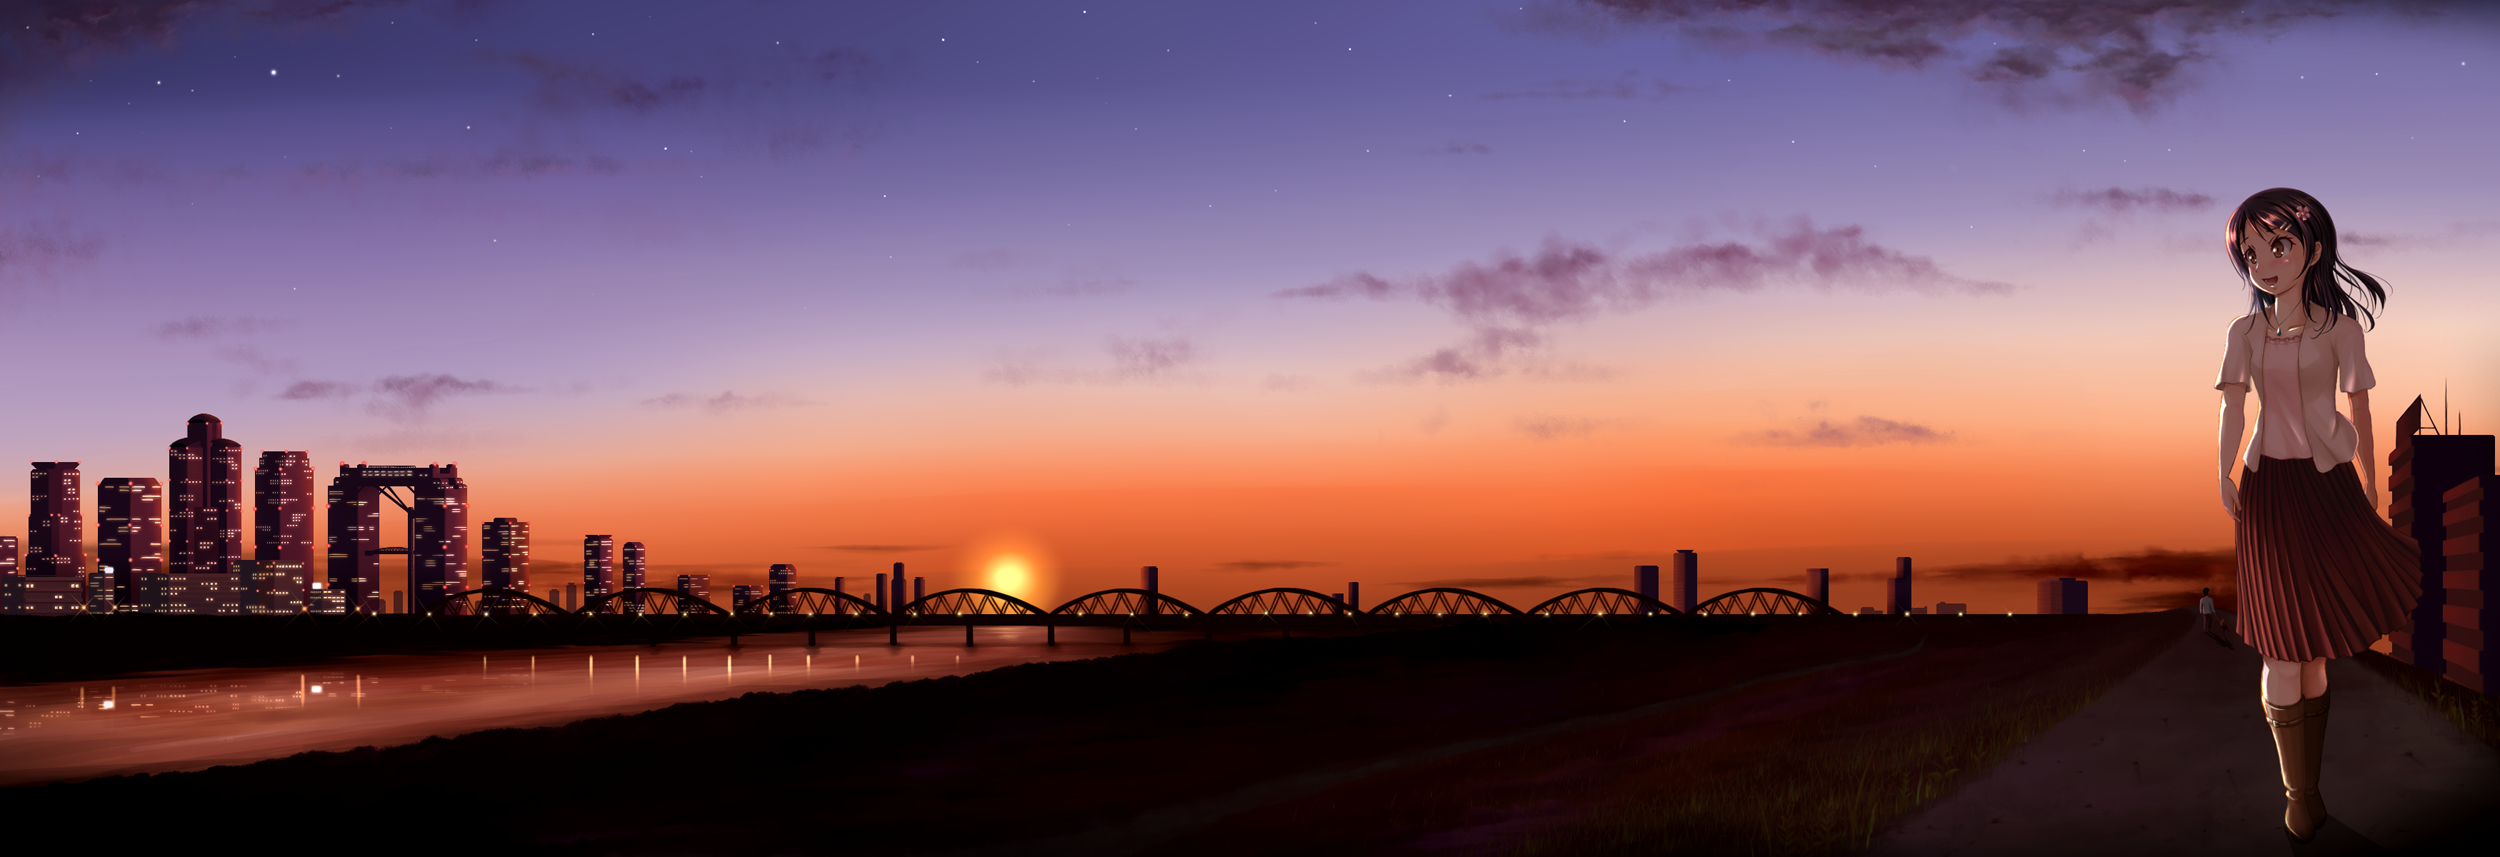 Anime 2500x857 sunset city bridge anime girls cityscape